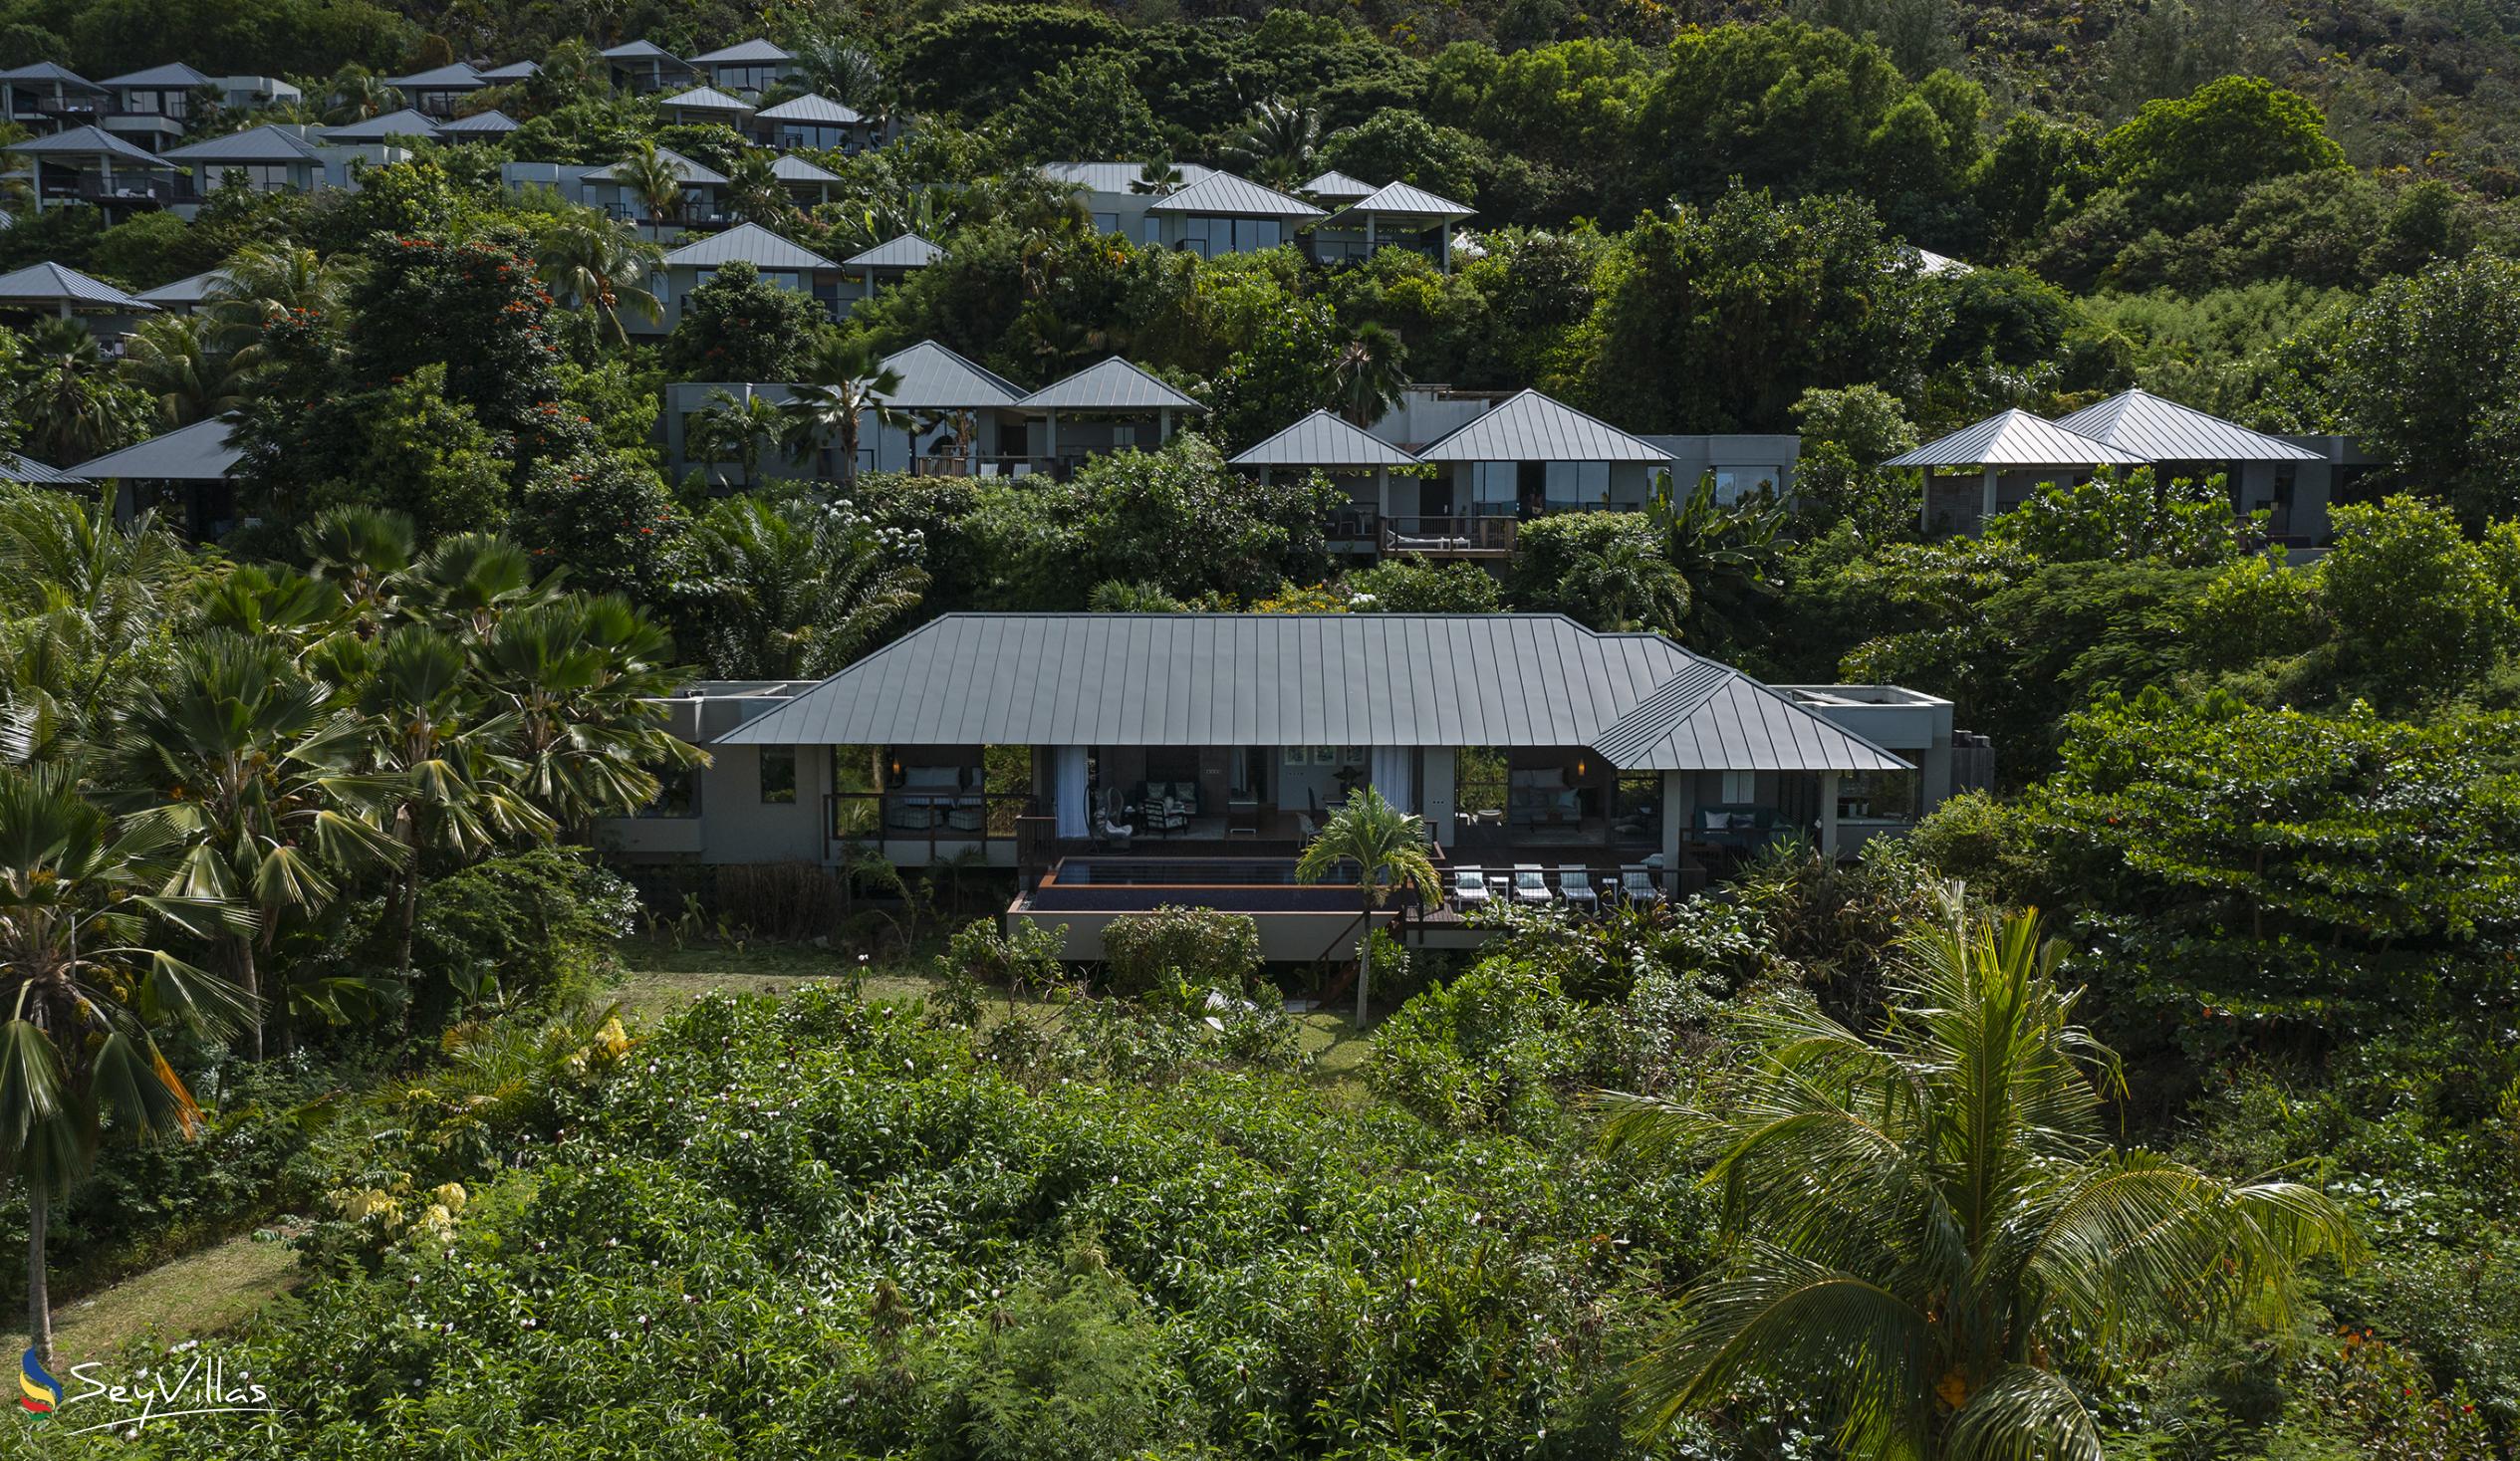 Photo 87: Raffles - 2-Bedroom Beachfront Pool Villa - Praslin (Seychelles)